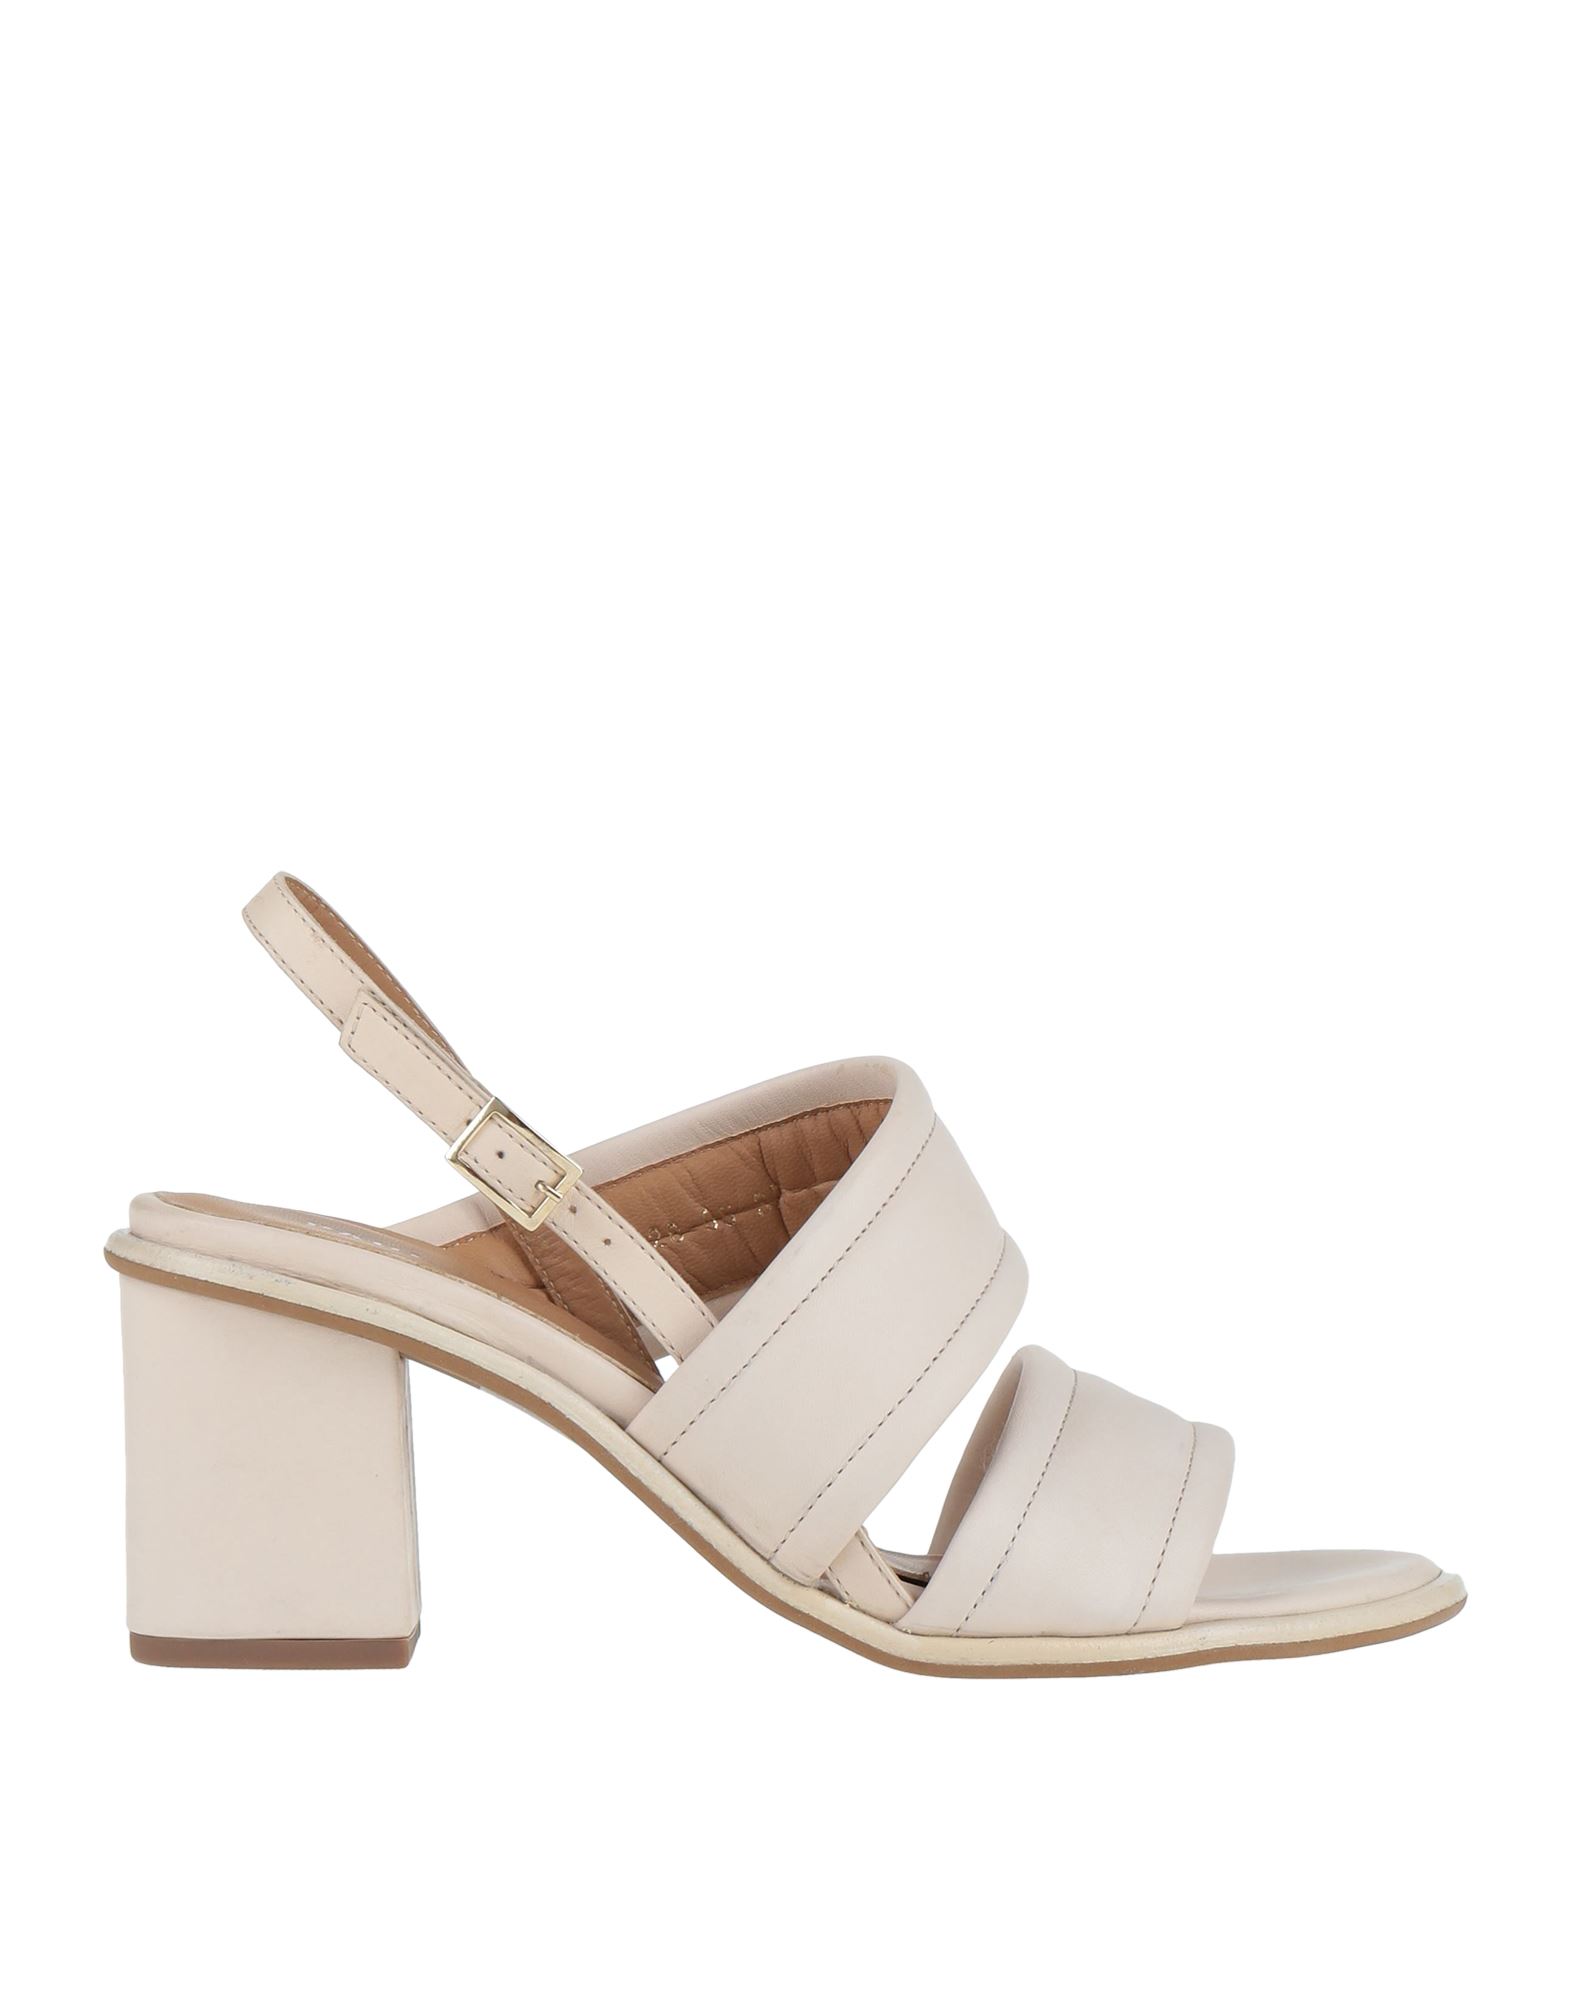 Paola Ferri Sandals In White